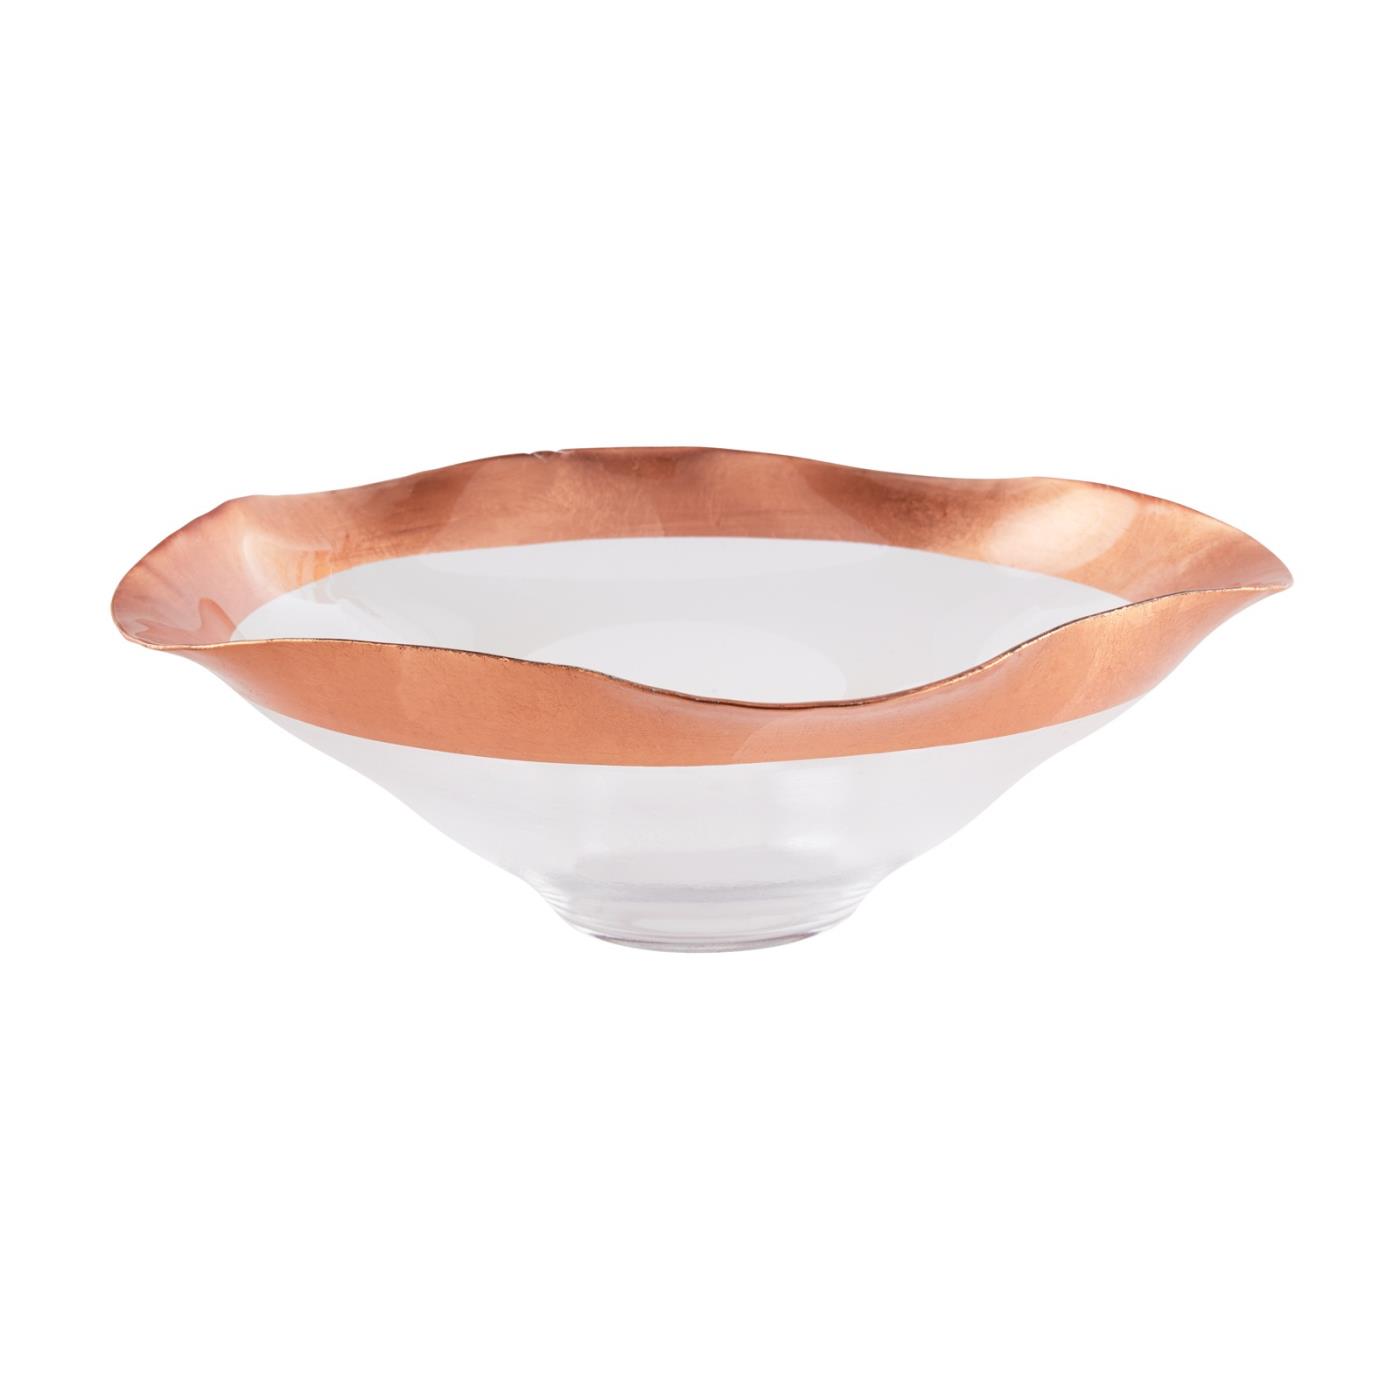 Copper Luster Bowl - 13.75"